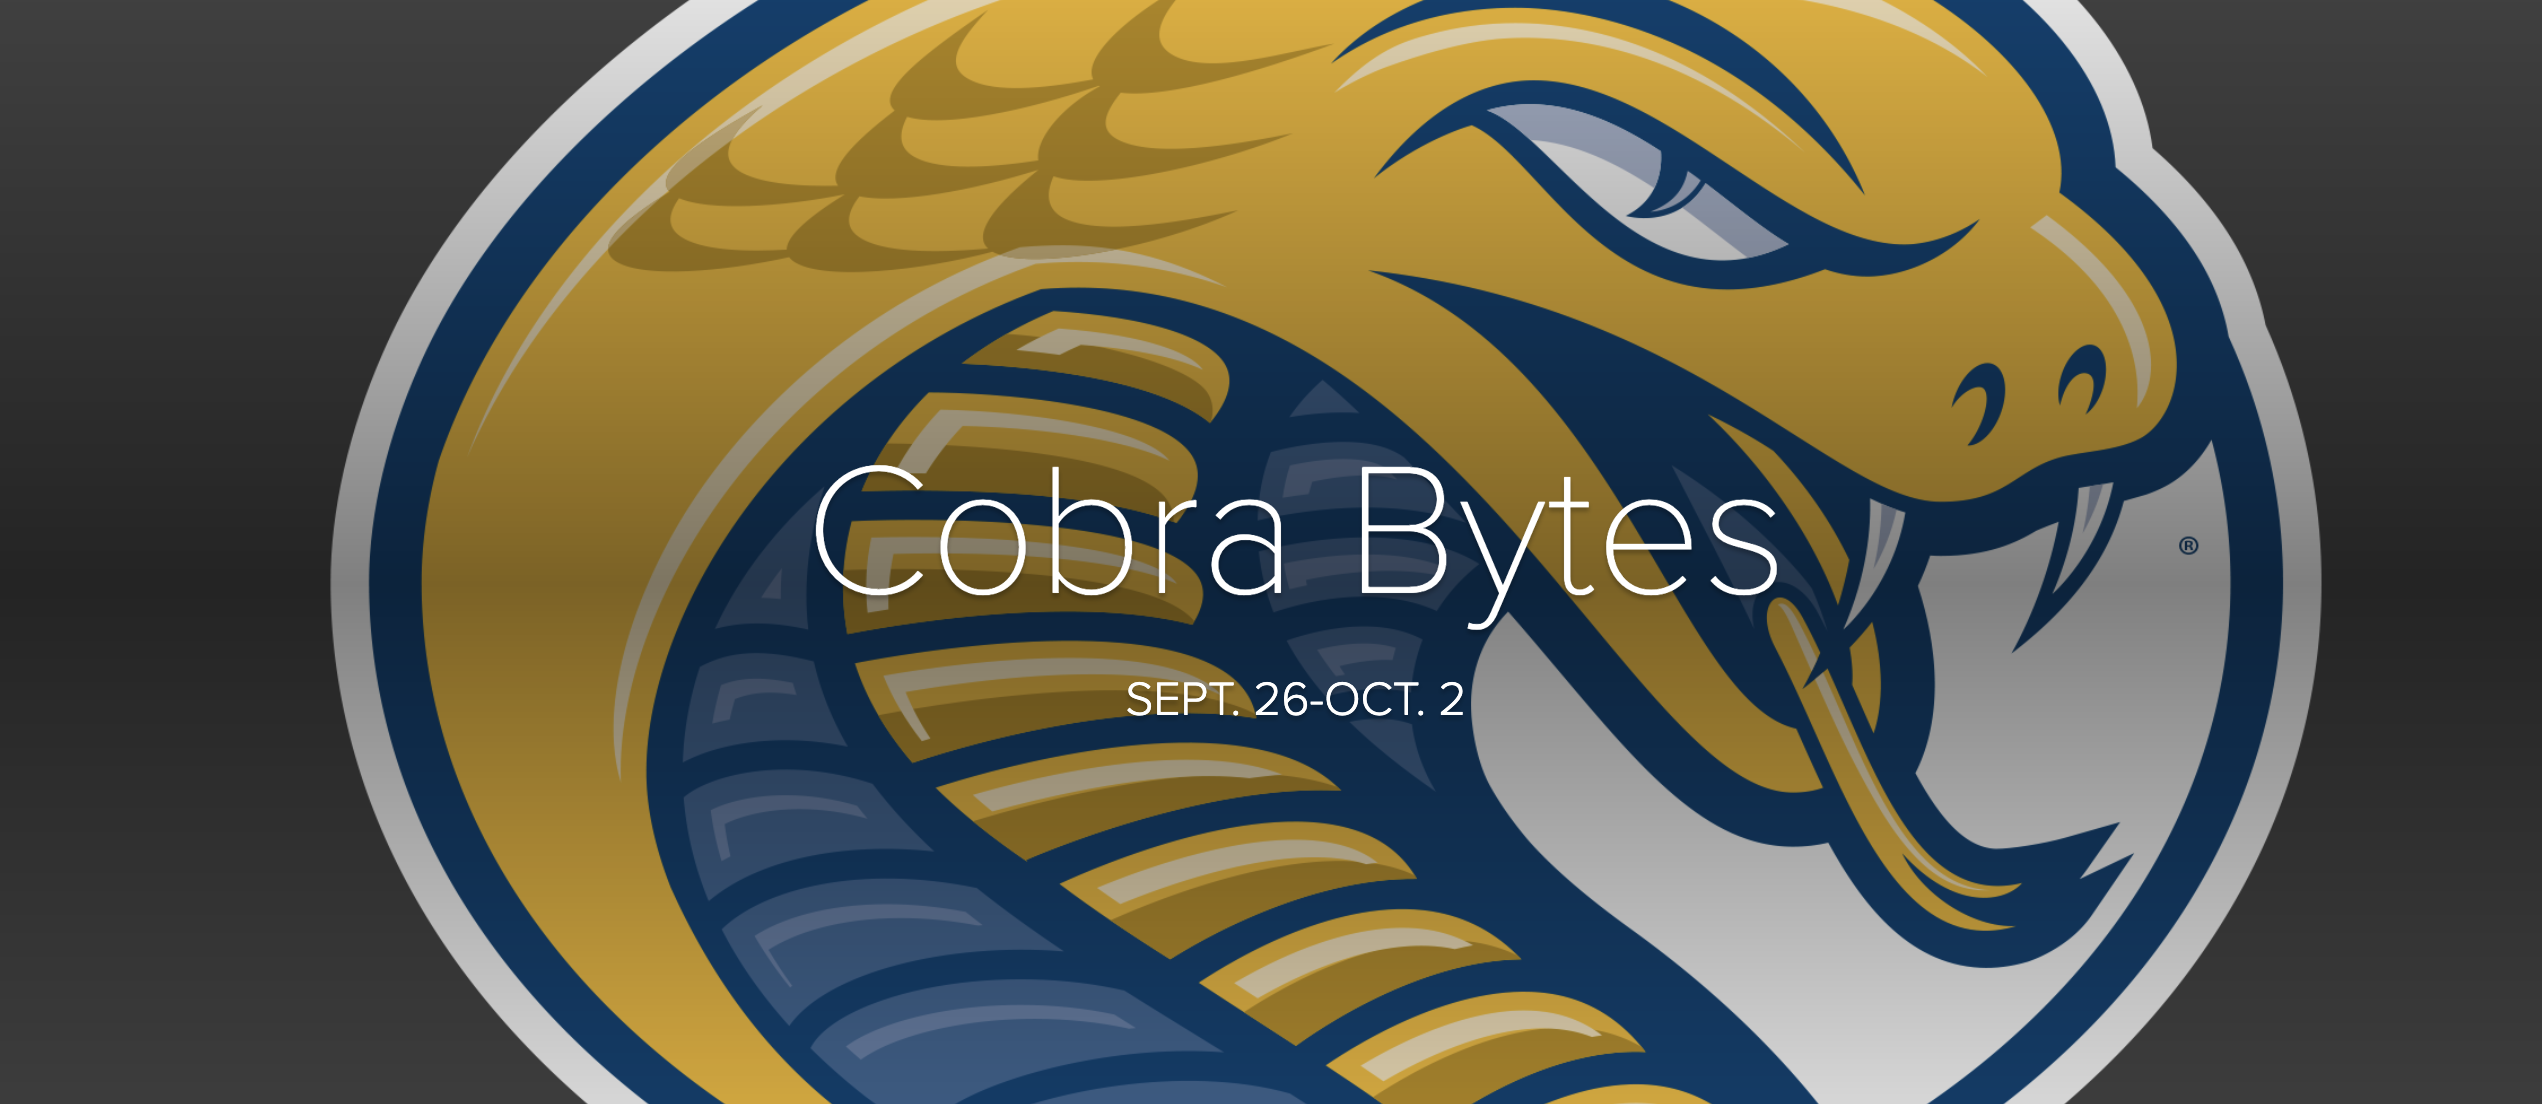 Cobra Bytes Sept. 26-Oct. 2